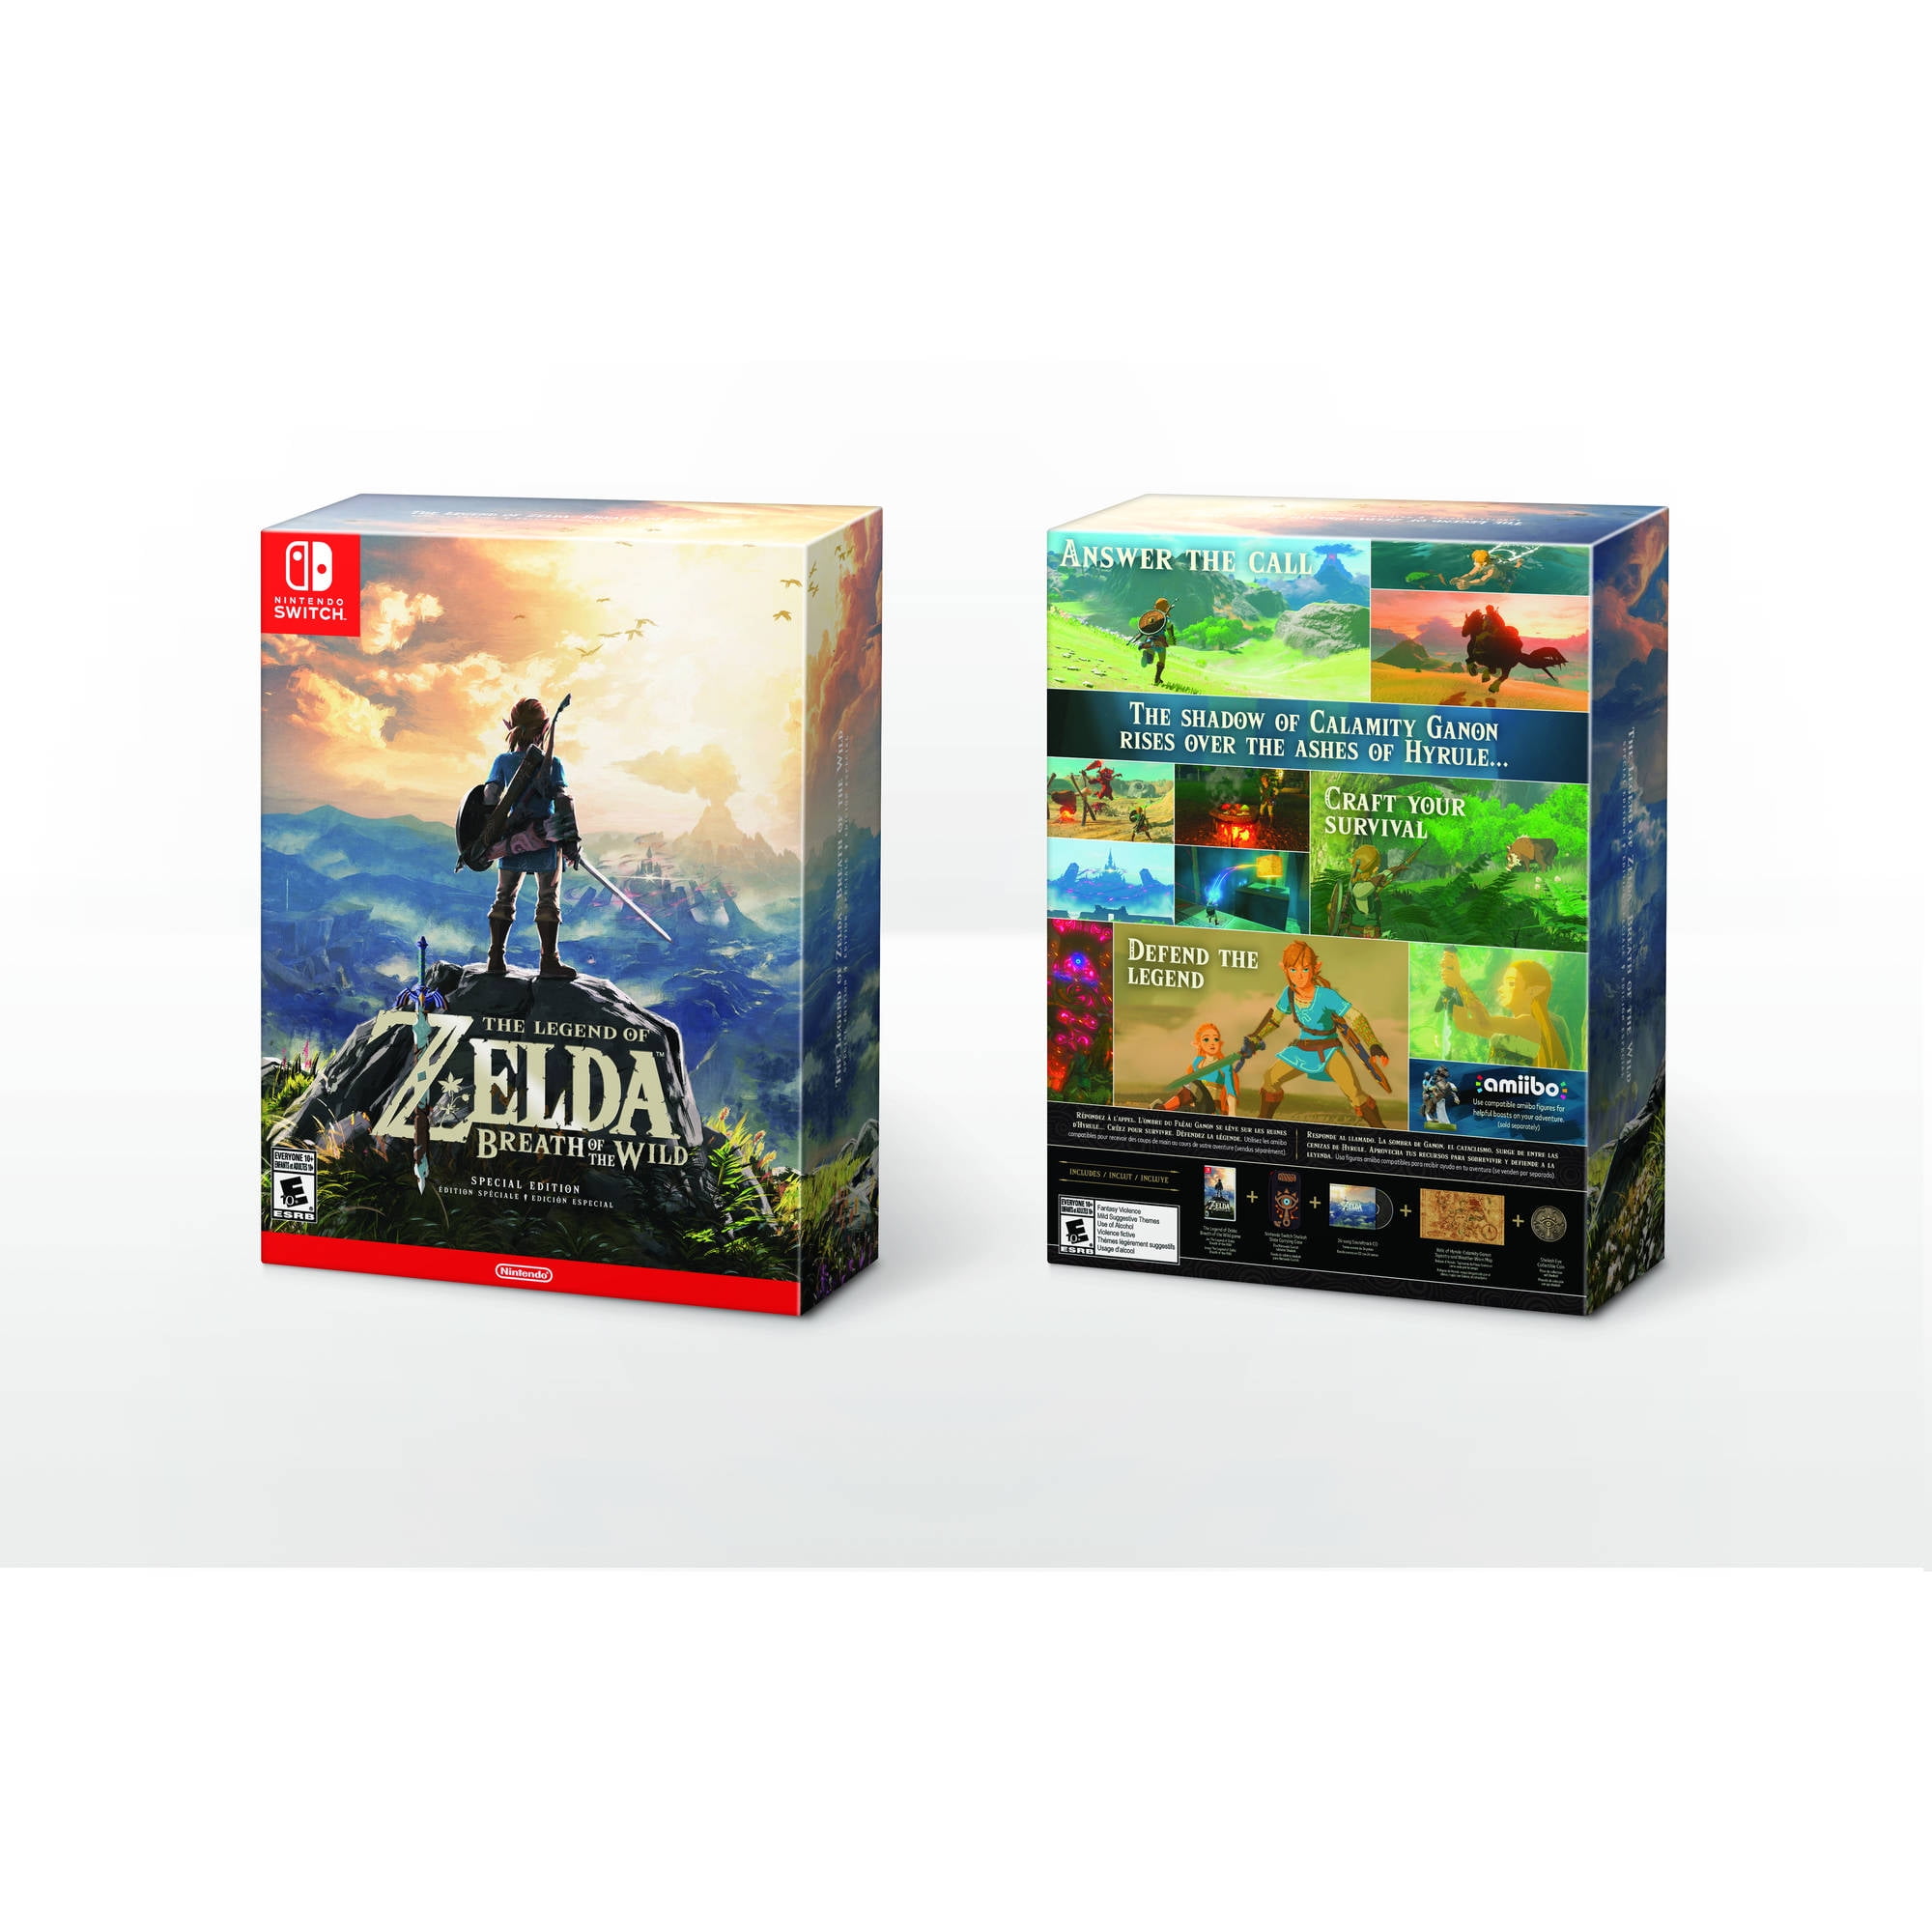 Nintendo Releases Special Version of Legend of Zelda for Switch